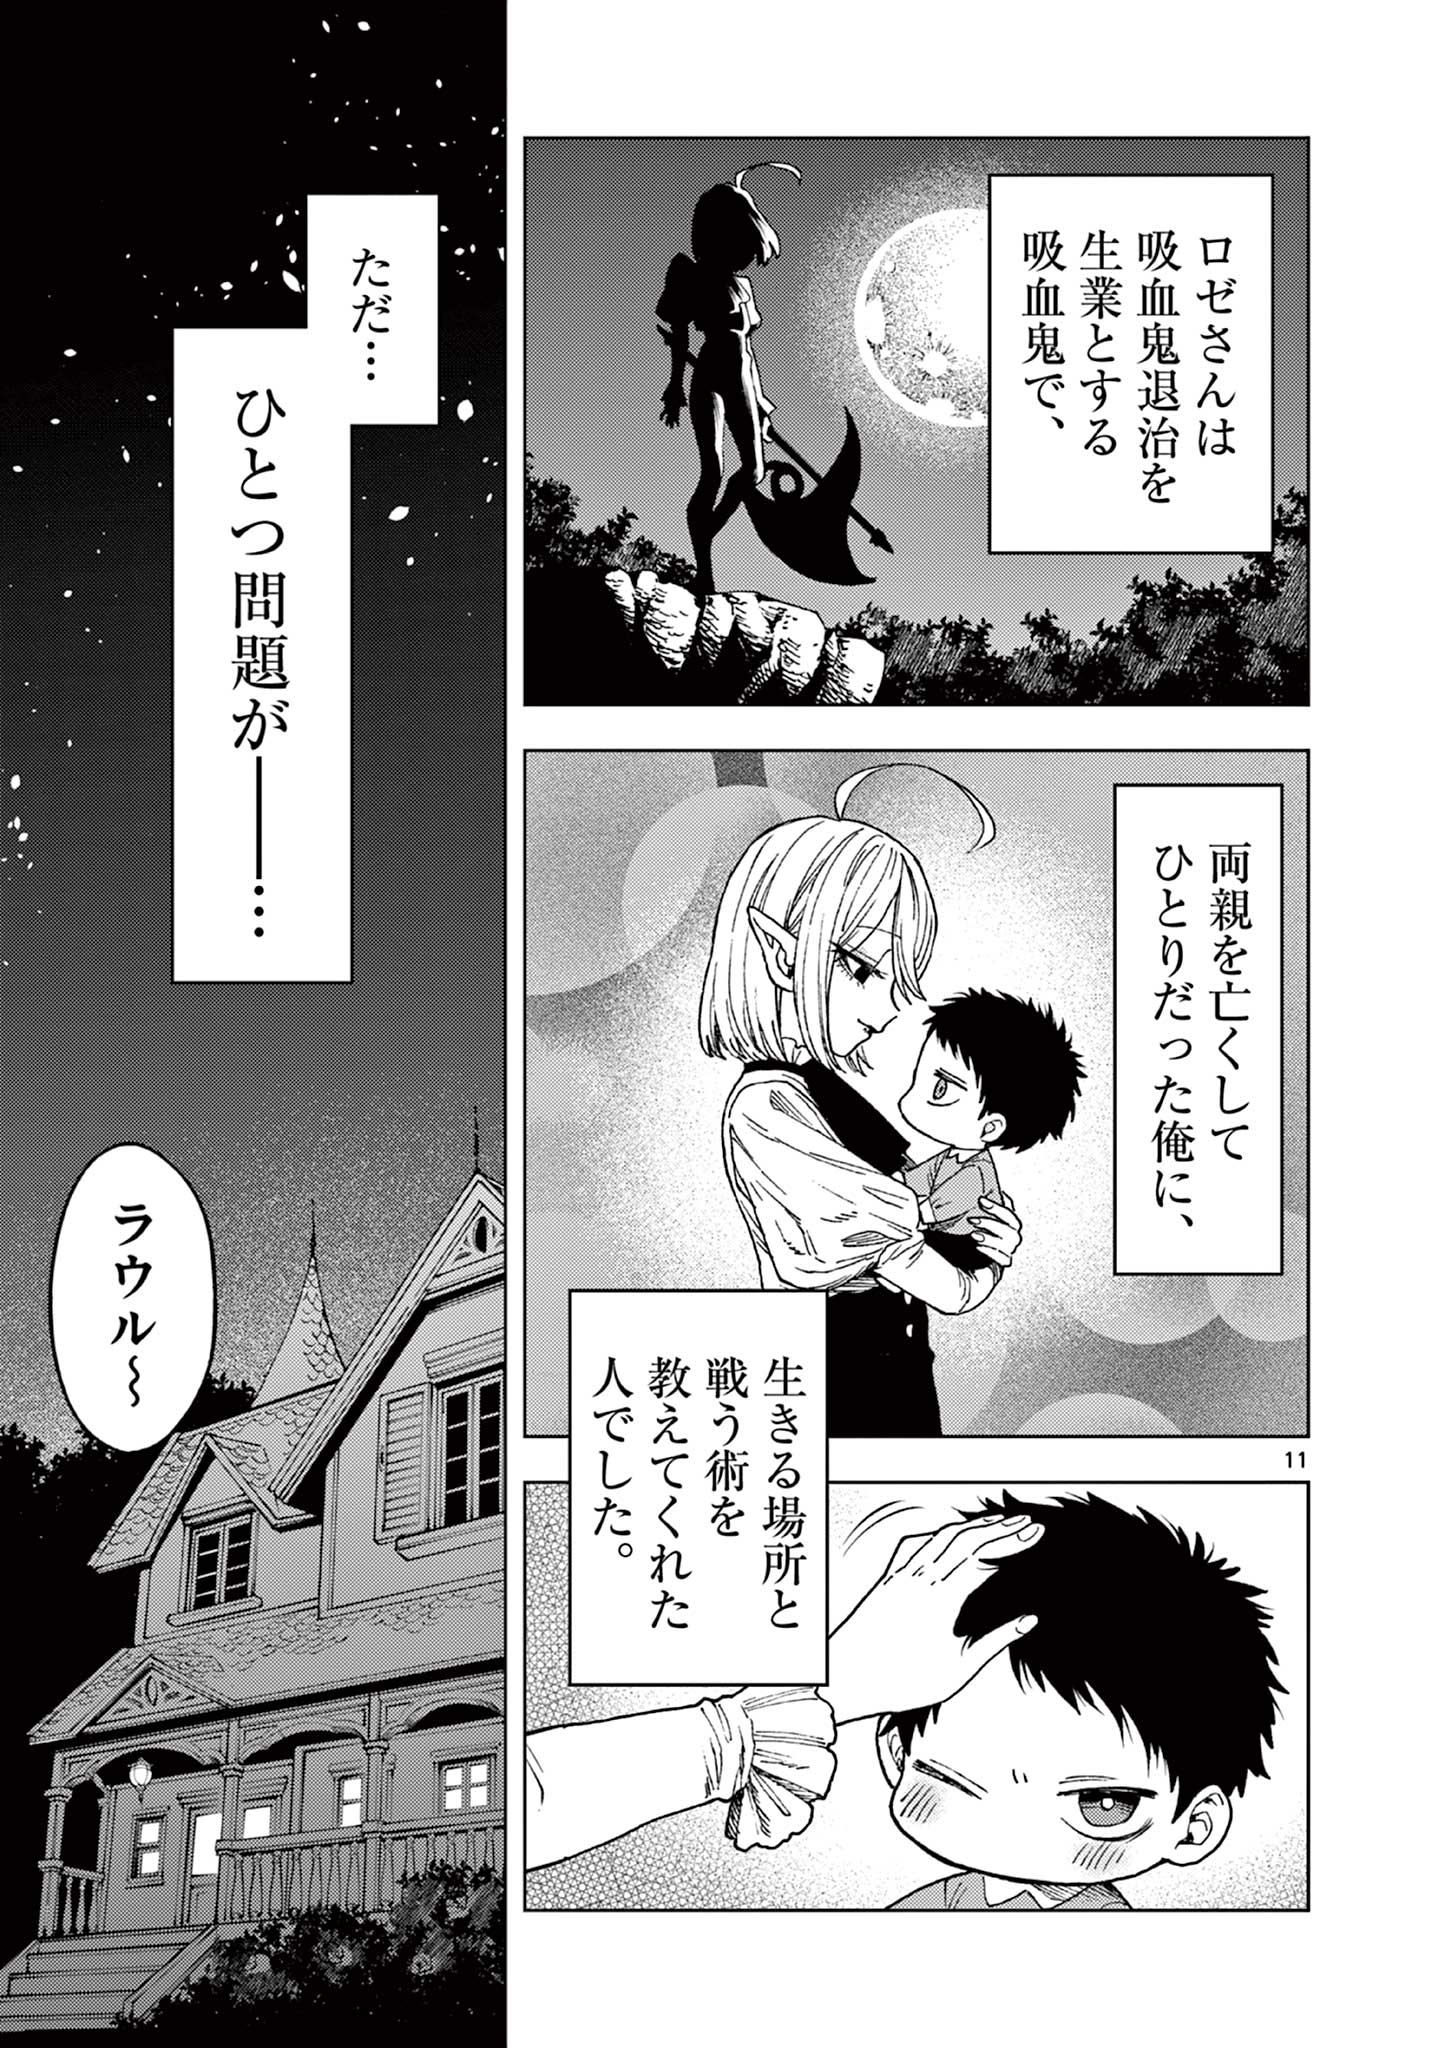 Raul to Kyuuketsuki - Chapter 1 - Page 11